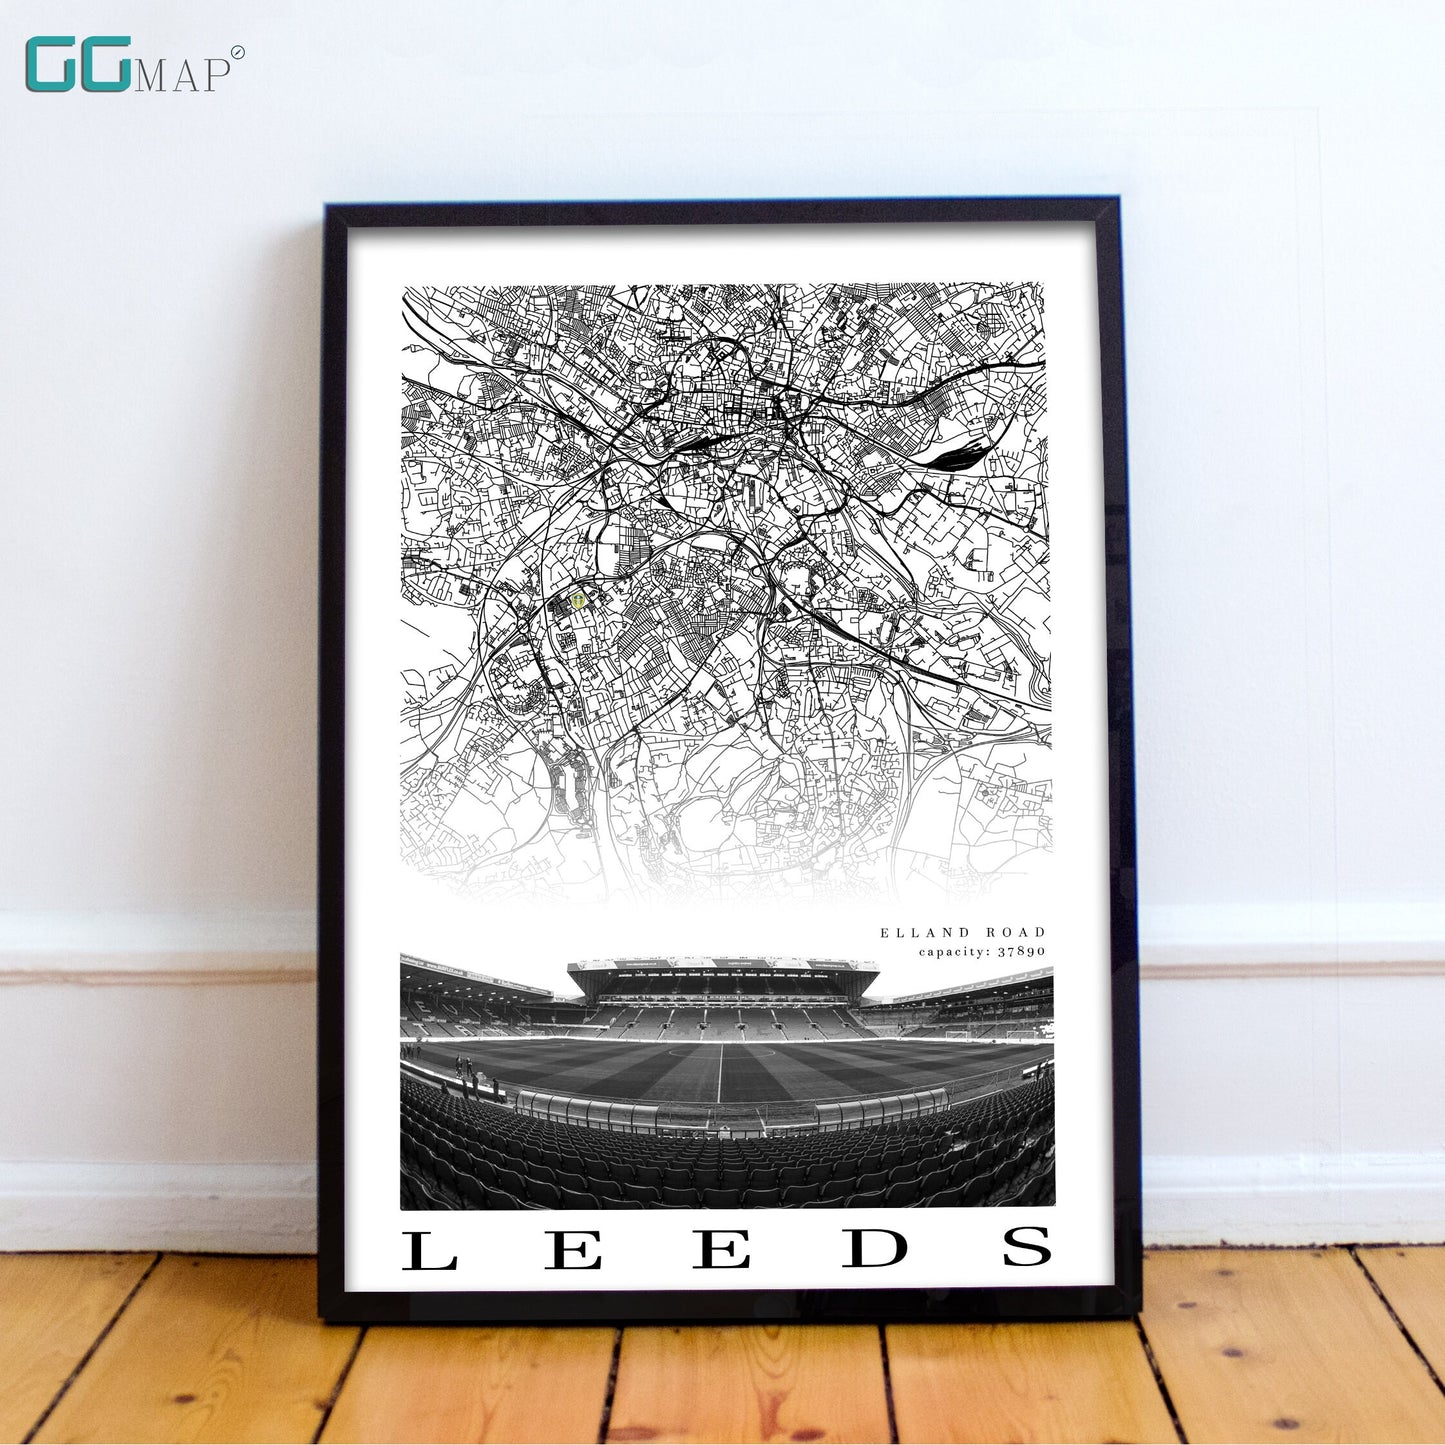 City map of LEEDS - Elland Road - Home Decor Elland Road - Wall decor - Elland Road gift - Print map - Leeds United Stadium